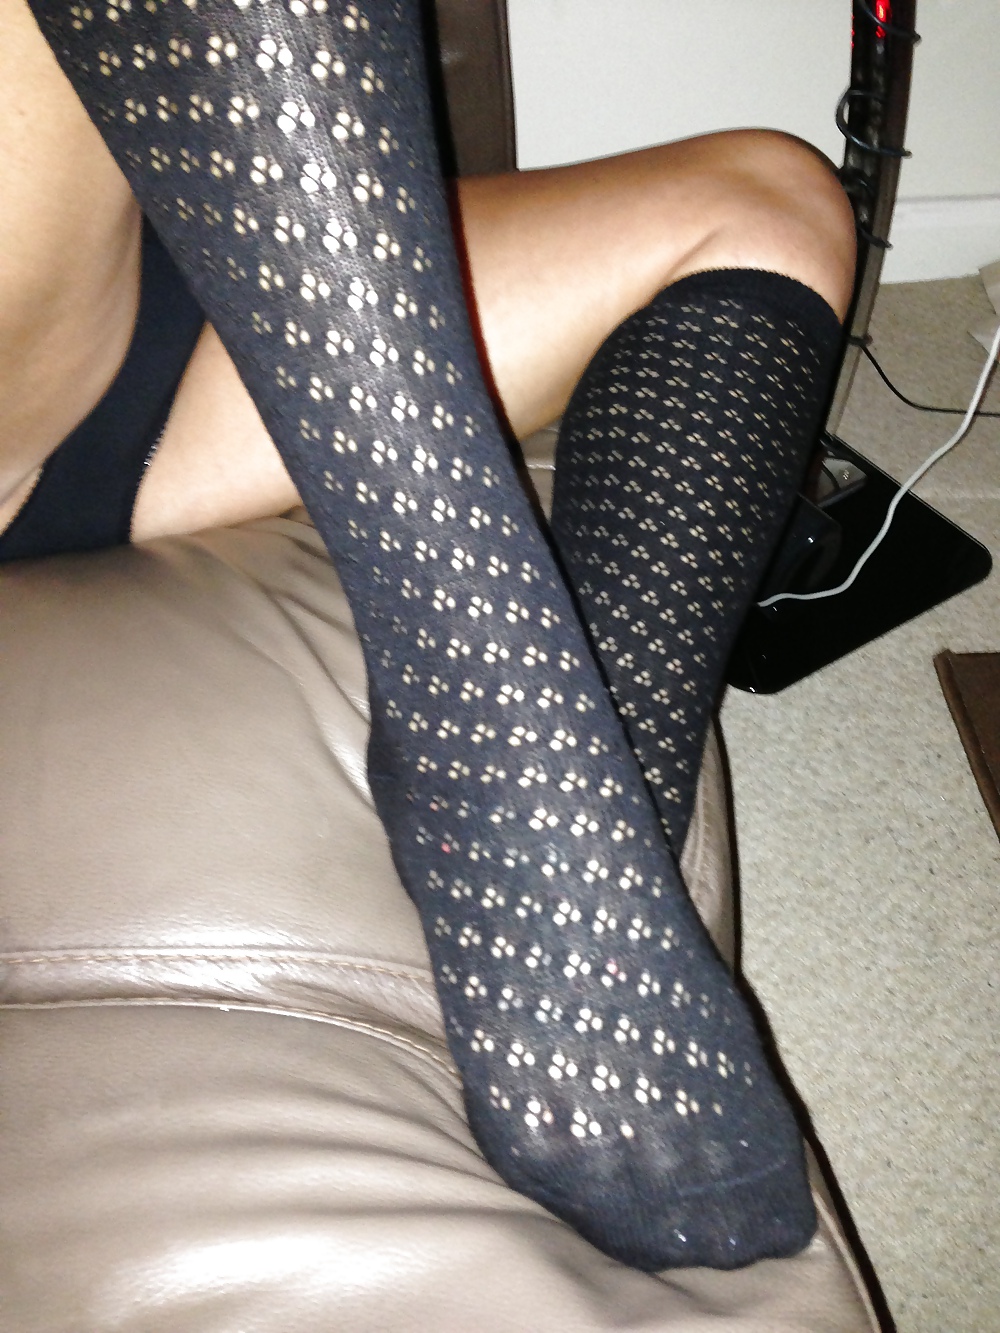 Jayne in sexy knee high socks b4 sally69 cam fun #16795356